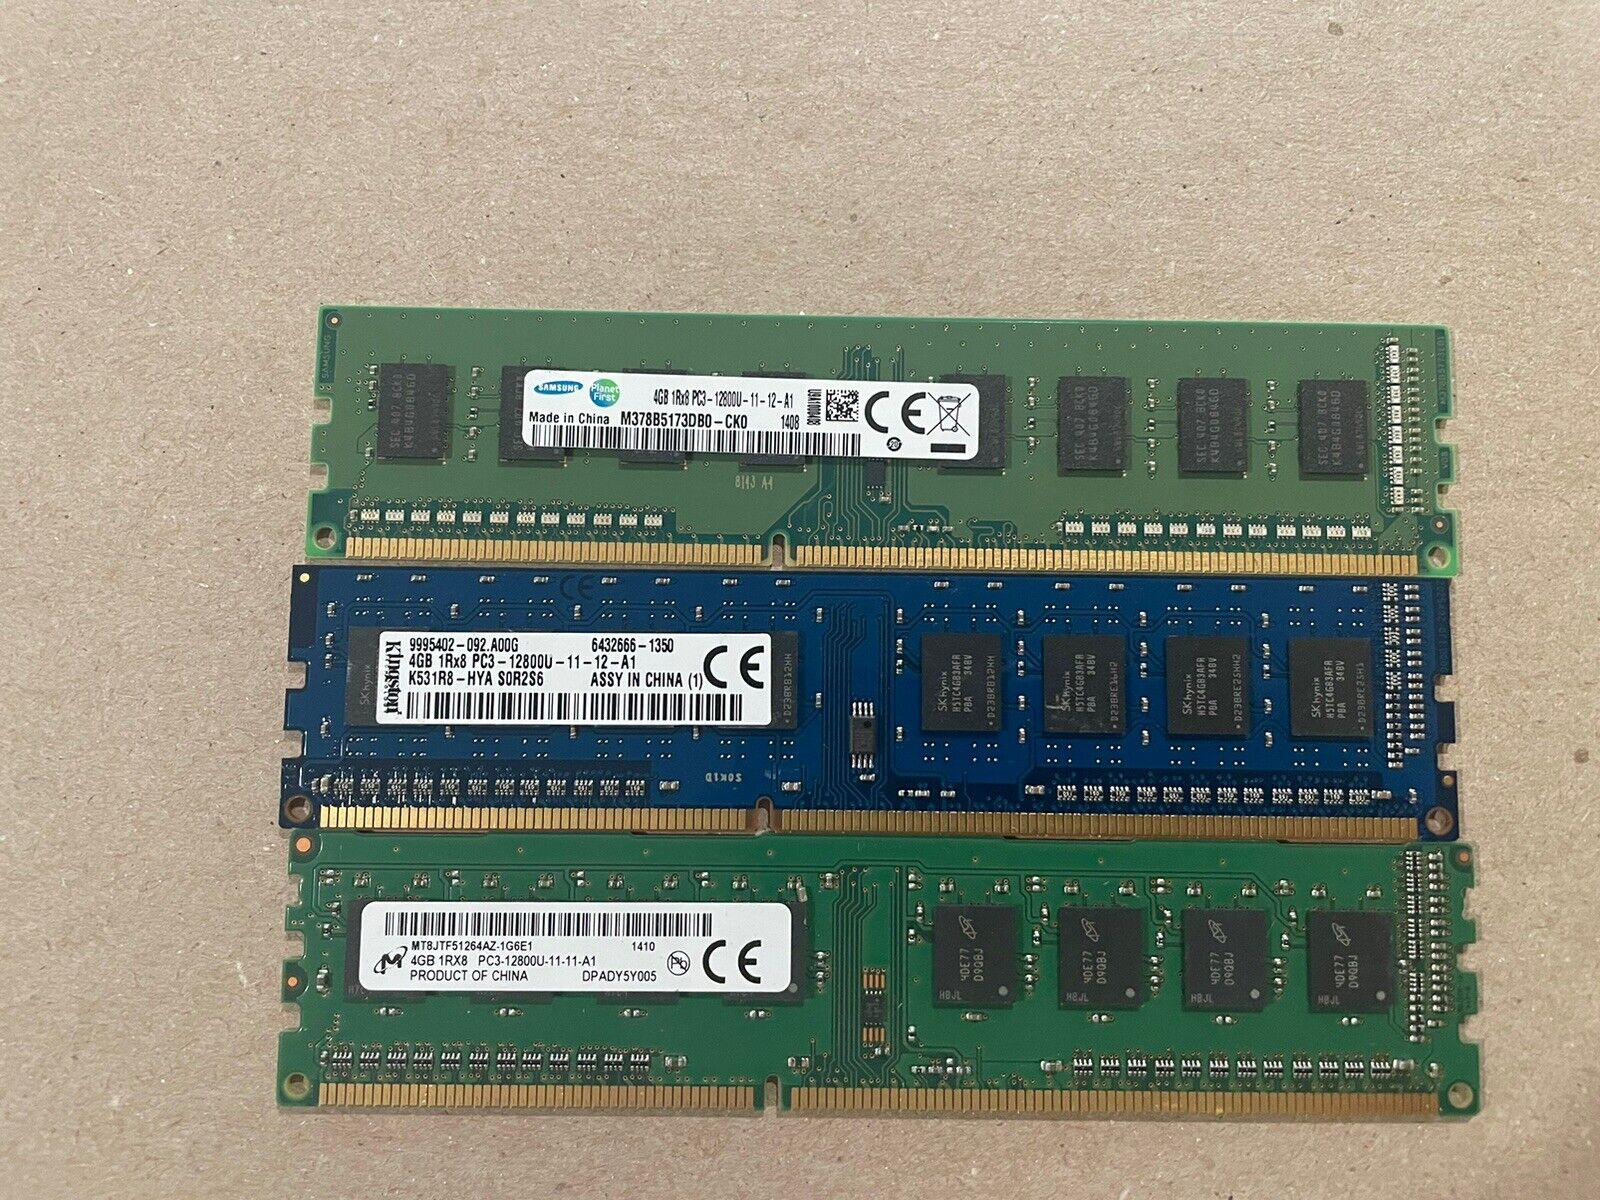 Lot of 160 X 4GB PC3-12800U DDR3 1600 MHz DIMM Desktop Memory RAM